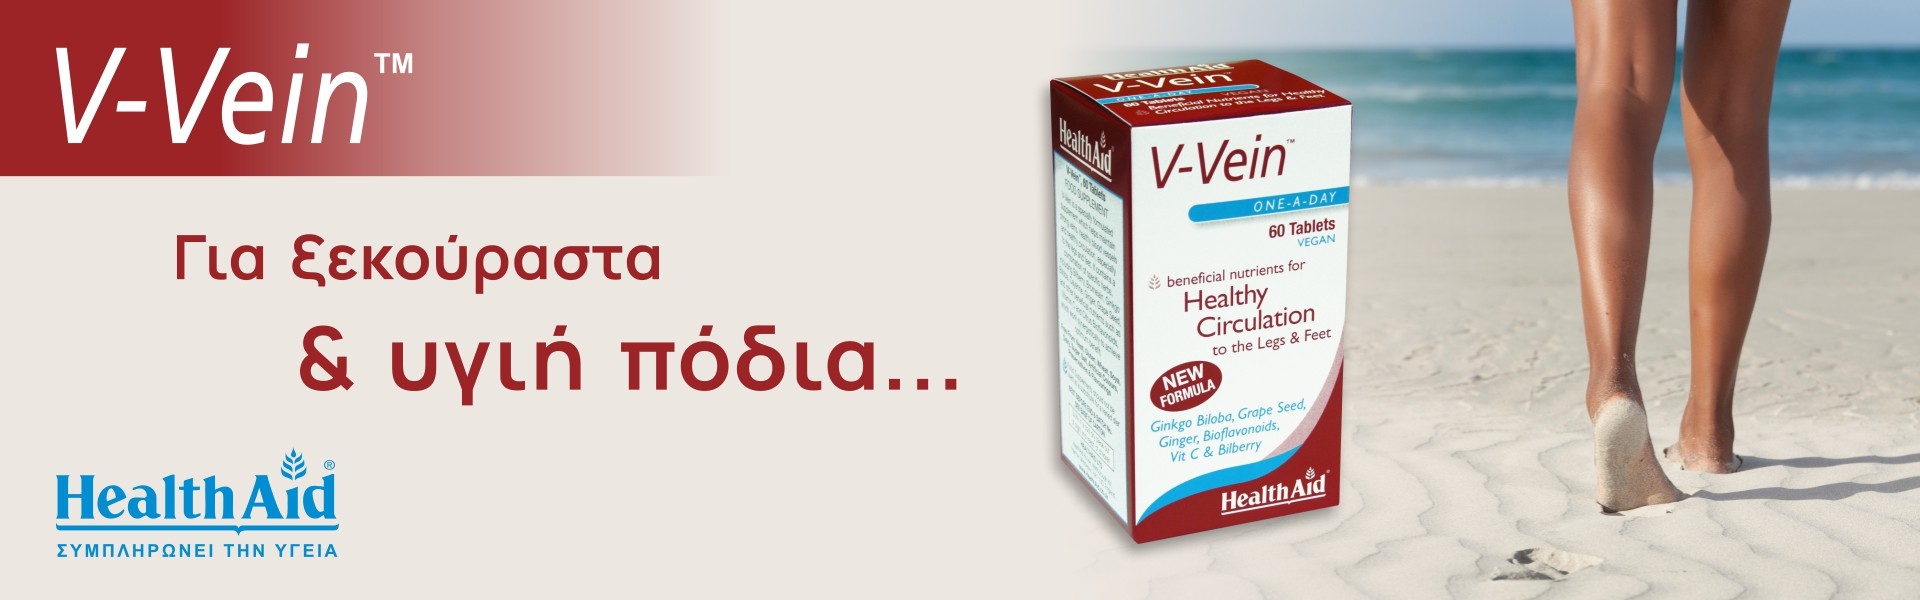 HEALTH AID V-VEIN